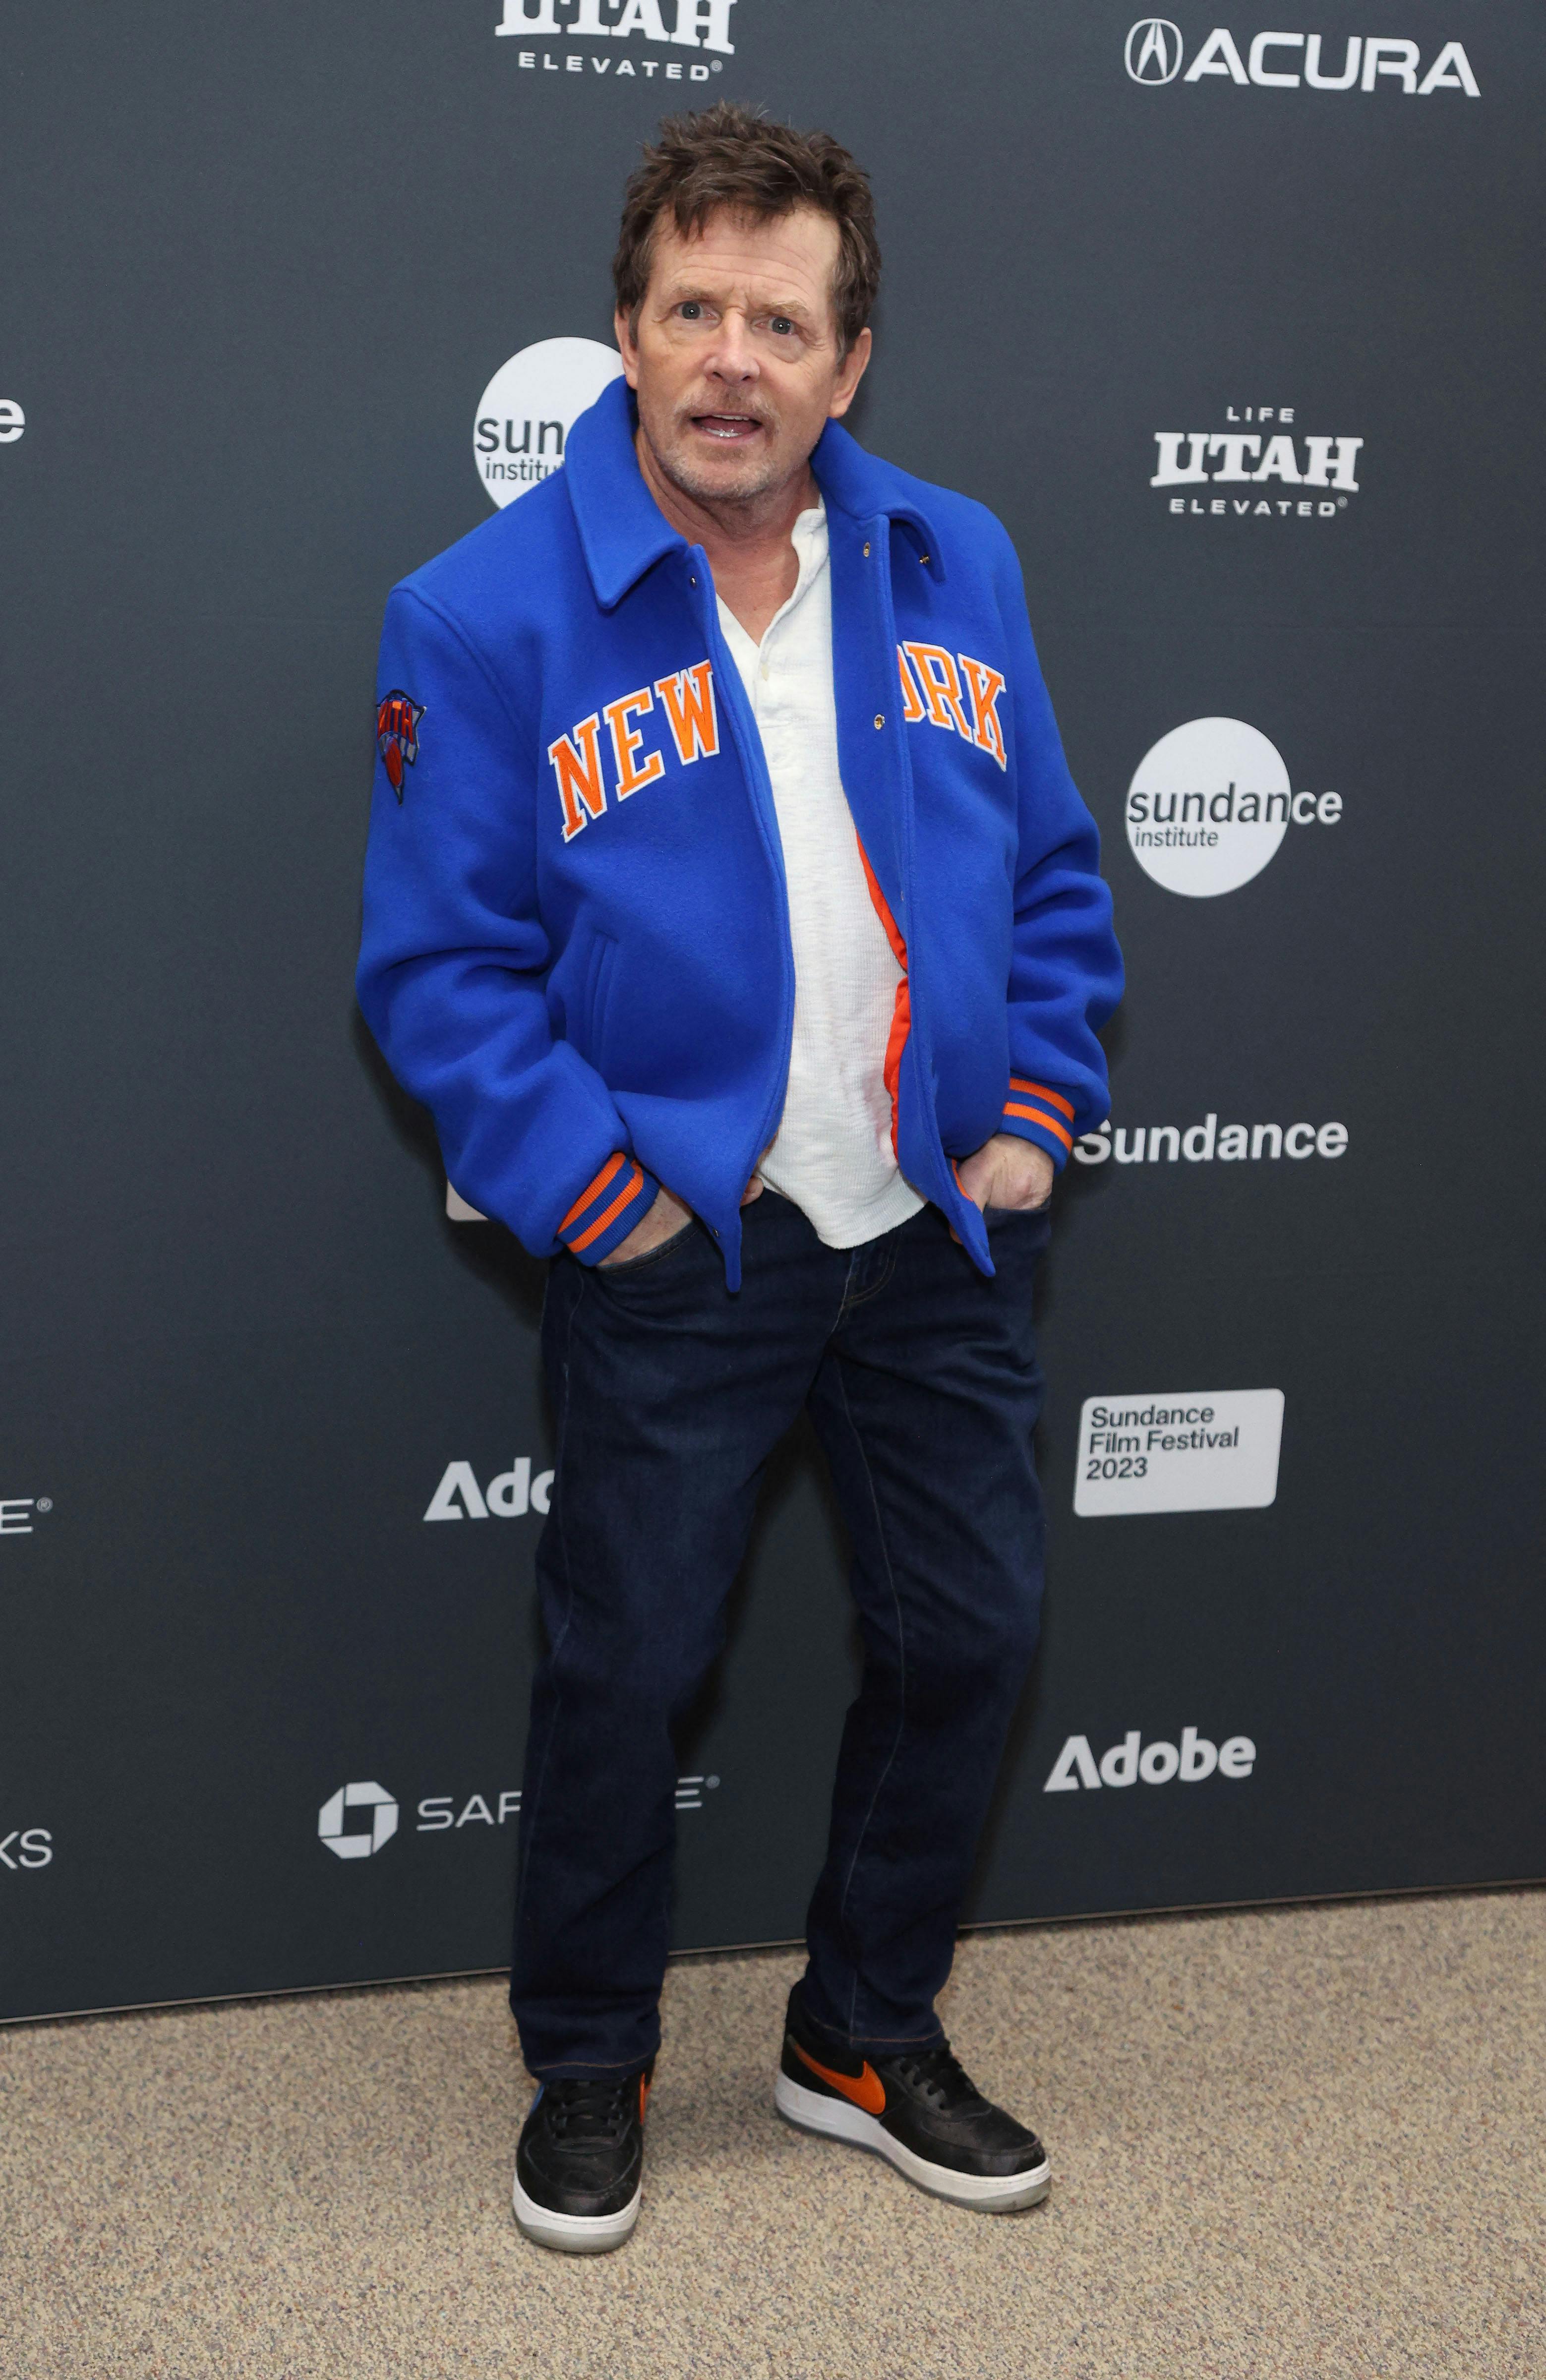 Sygdommen har sat sine spor på den 61-årige skuespiller og Parkinsons-aktivist Michael J. Fox. Forleden havde hans dokumentar "Still: A Michael J. Fox Movie" premiere på Sundance Film Festival.
